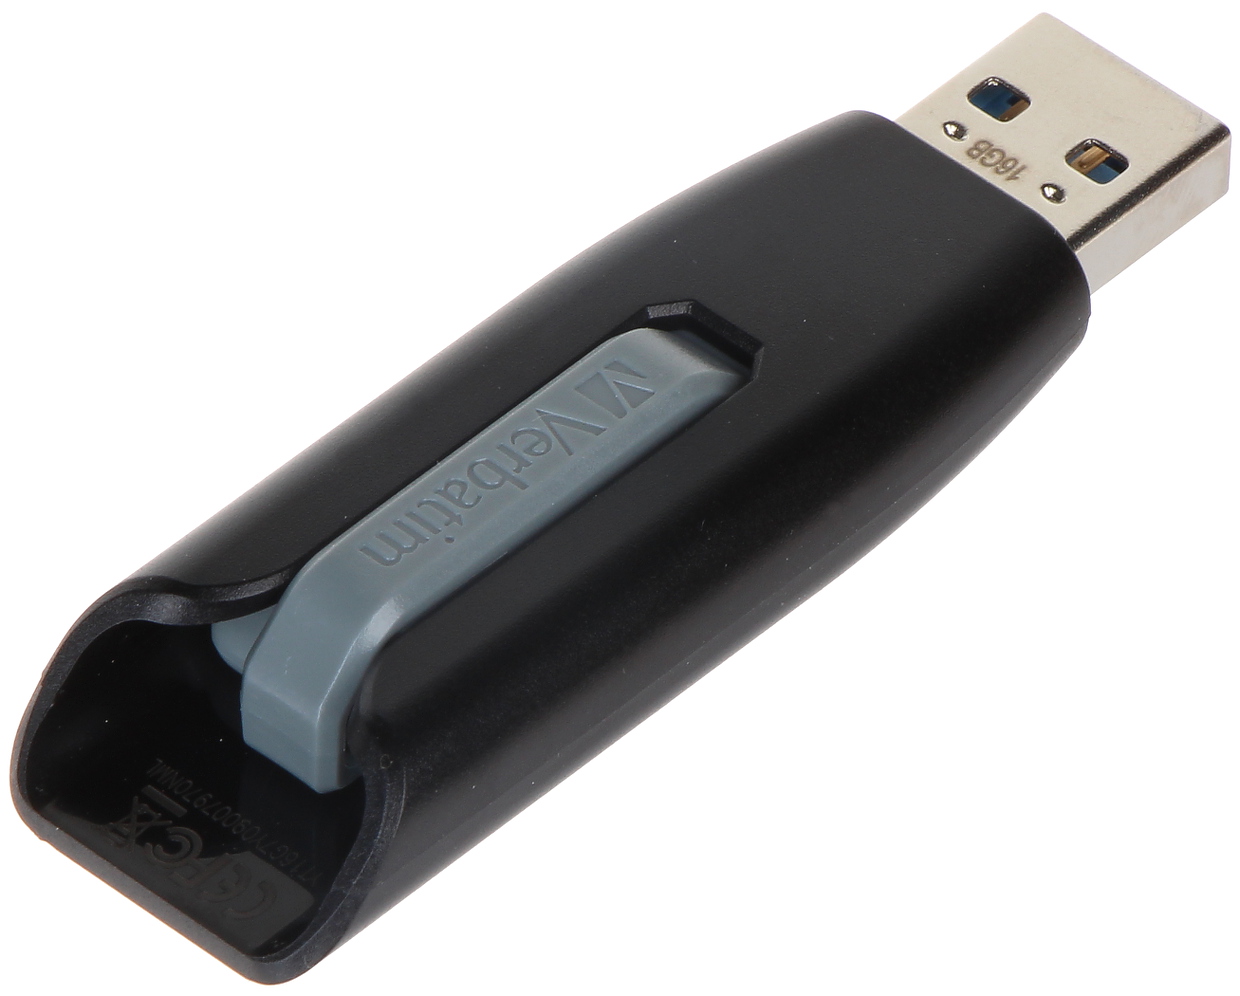 FLASH DRIVE USB 3.0 FD-16/49172-VERB 16 GB USB 3.0 VER... - Flash Drives -  Delta